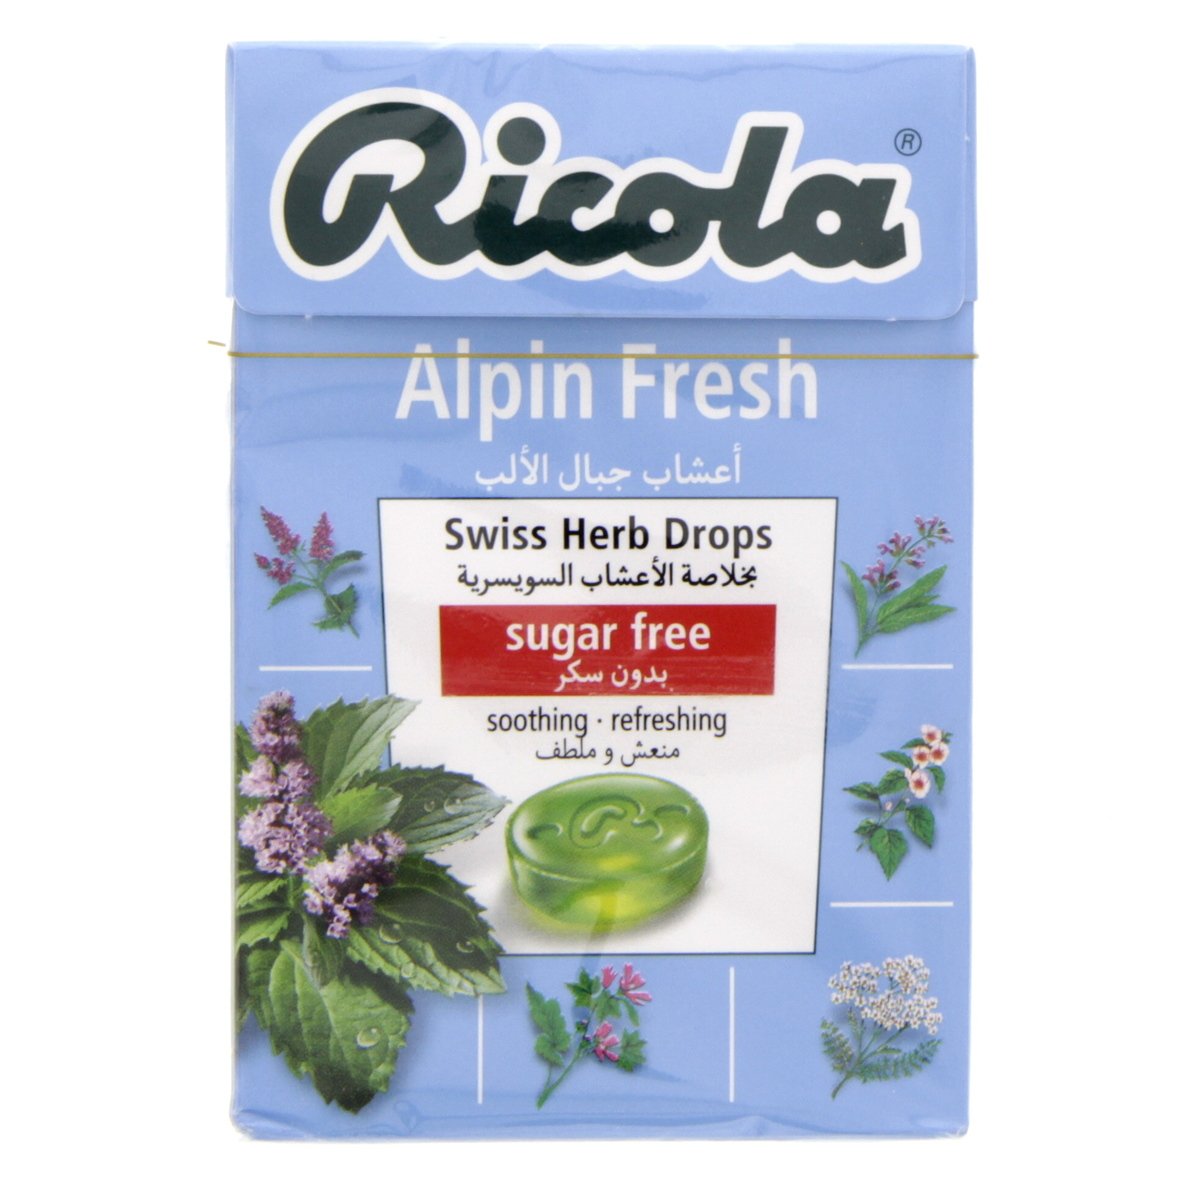 Ricola Alpin Fresh Swiss Herb Drops Sugar Free 45 g